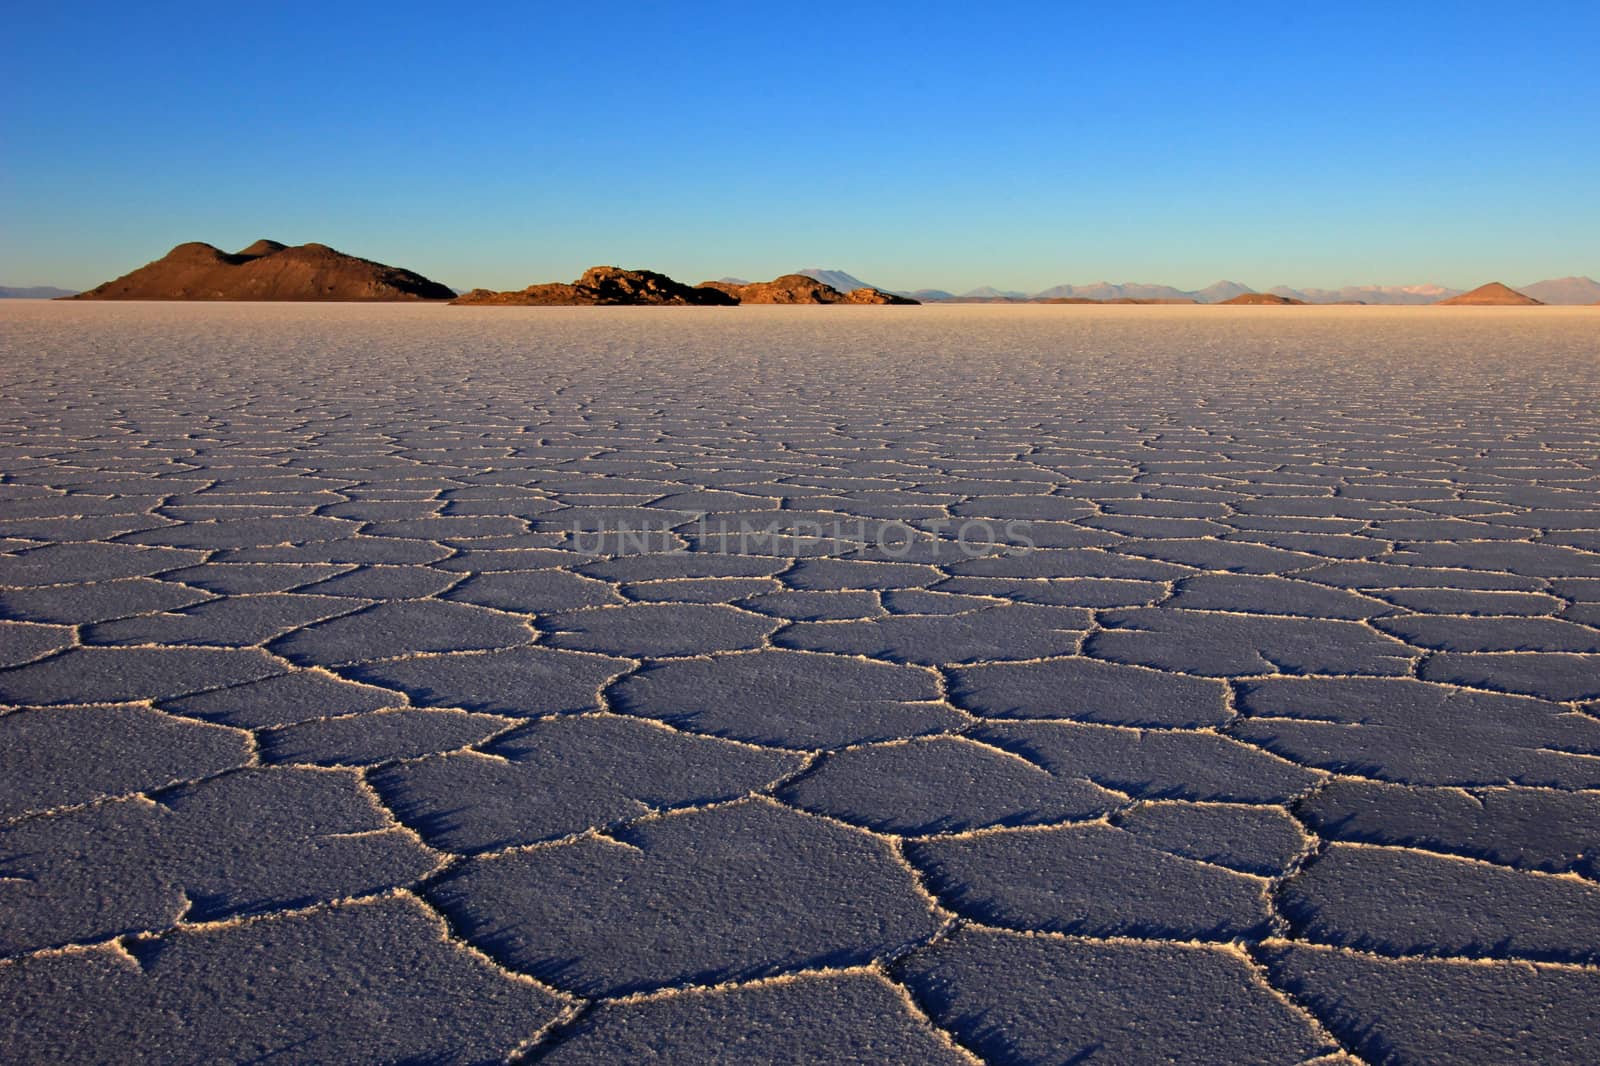 Salar de Uyuni, salt lake, is largest salt flat in the world, altiplano, Bolivia, South America, sunset